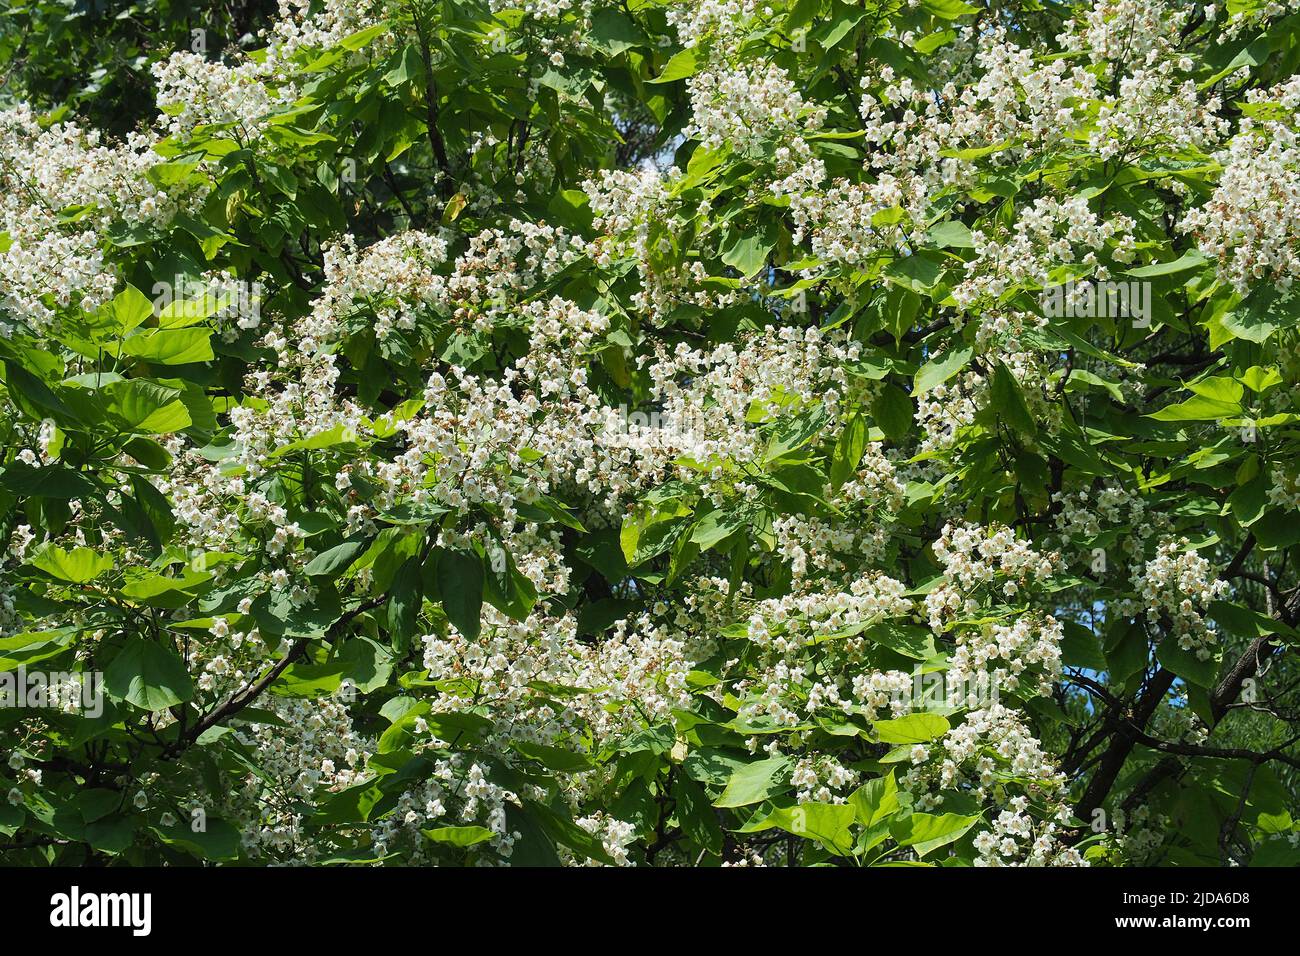 southern catalpa, cigartree, and Indian-bean-tree, Gewöhnlicher Trompetenbaum, Catalpa bignonioides, szívlevelű szivarfa, Budapest, Hungary, Europe Stock Photo